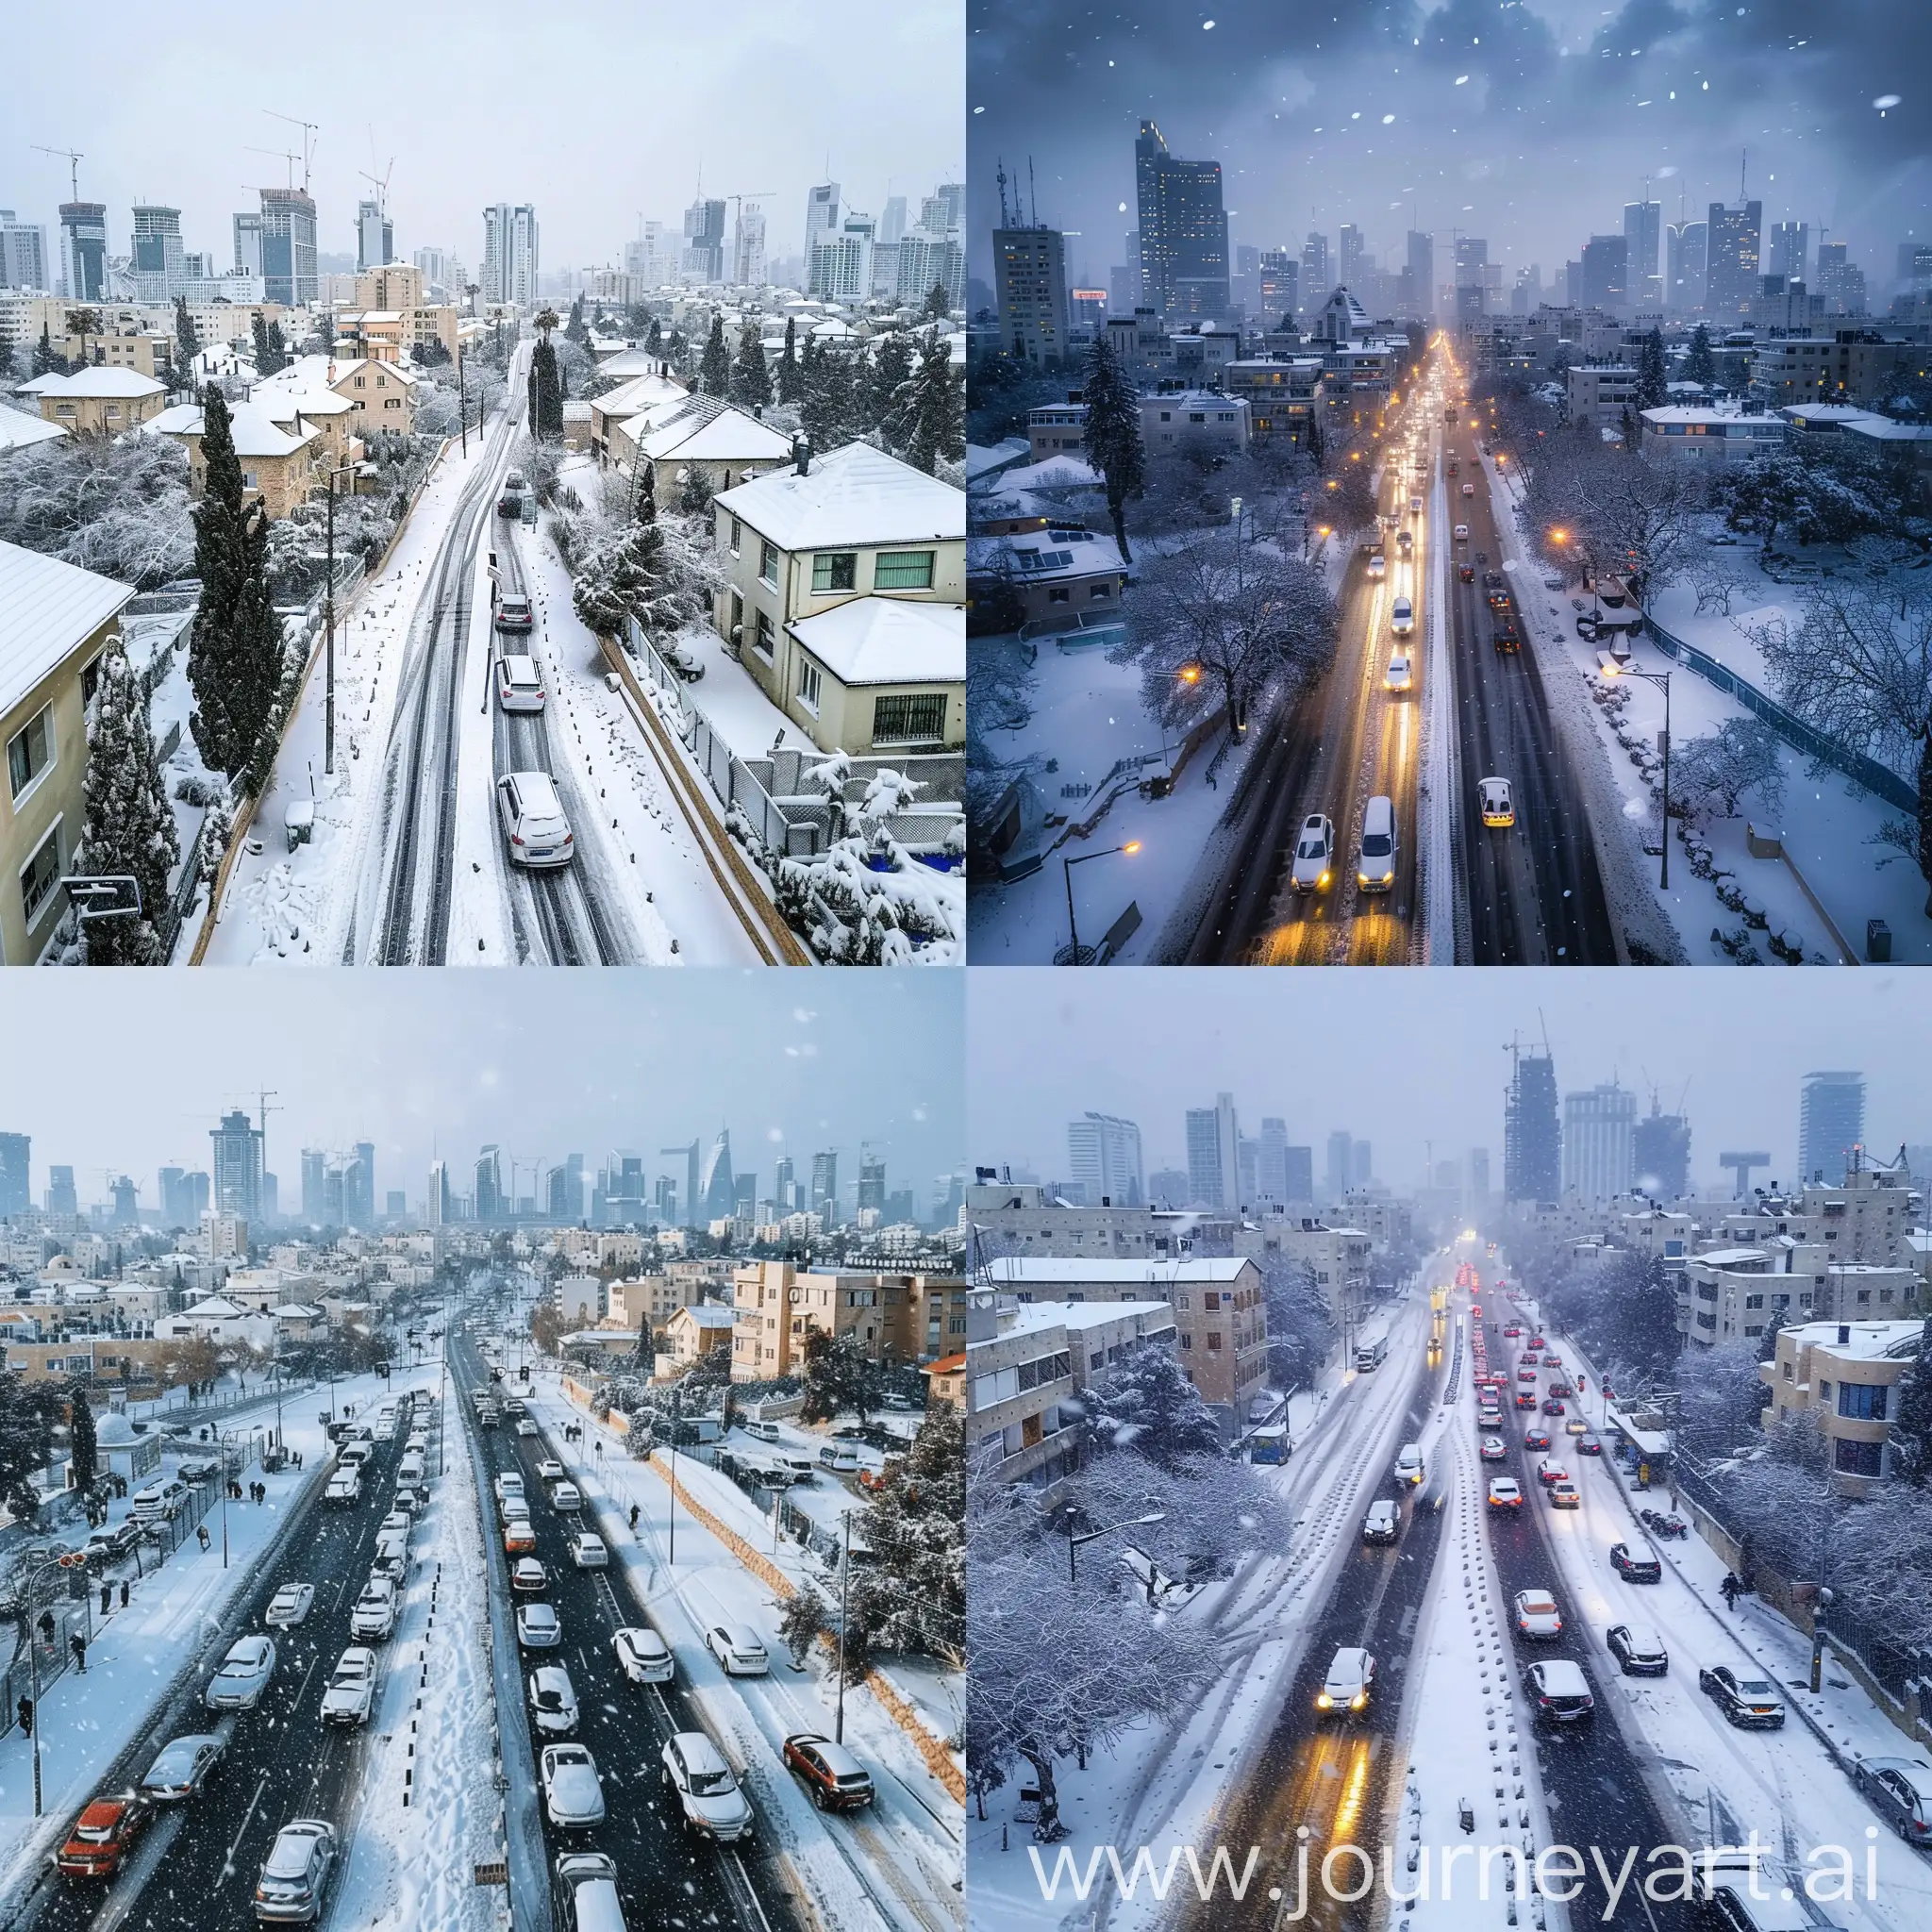 Snowy-Tel-Aviv-City-Frozen-in-Heavy-Snowfall-and-Traffic-Jams